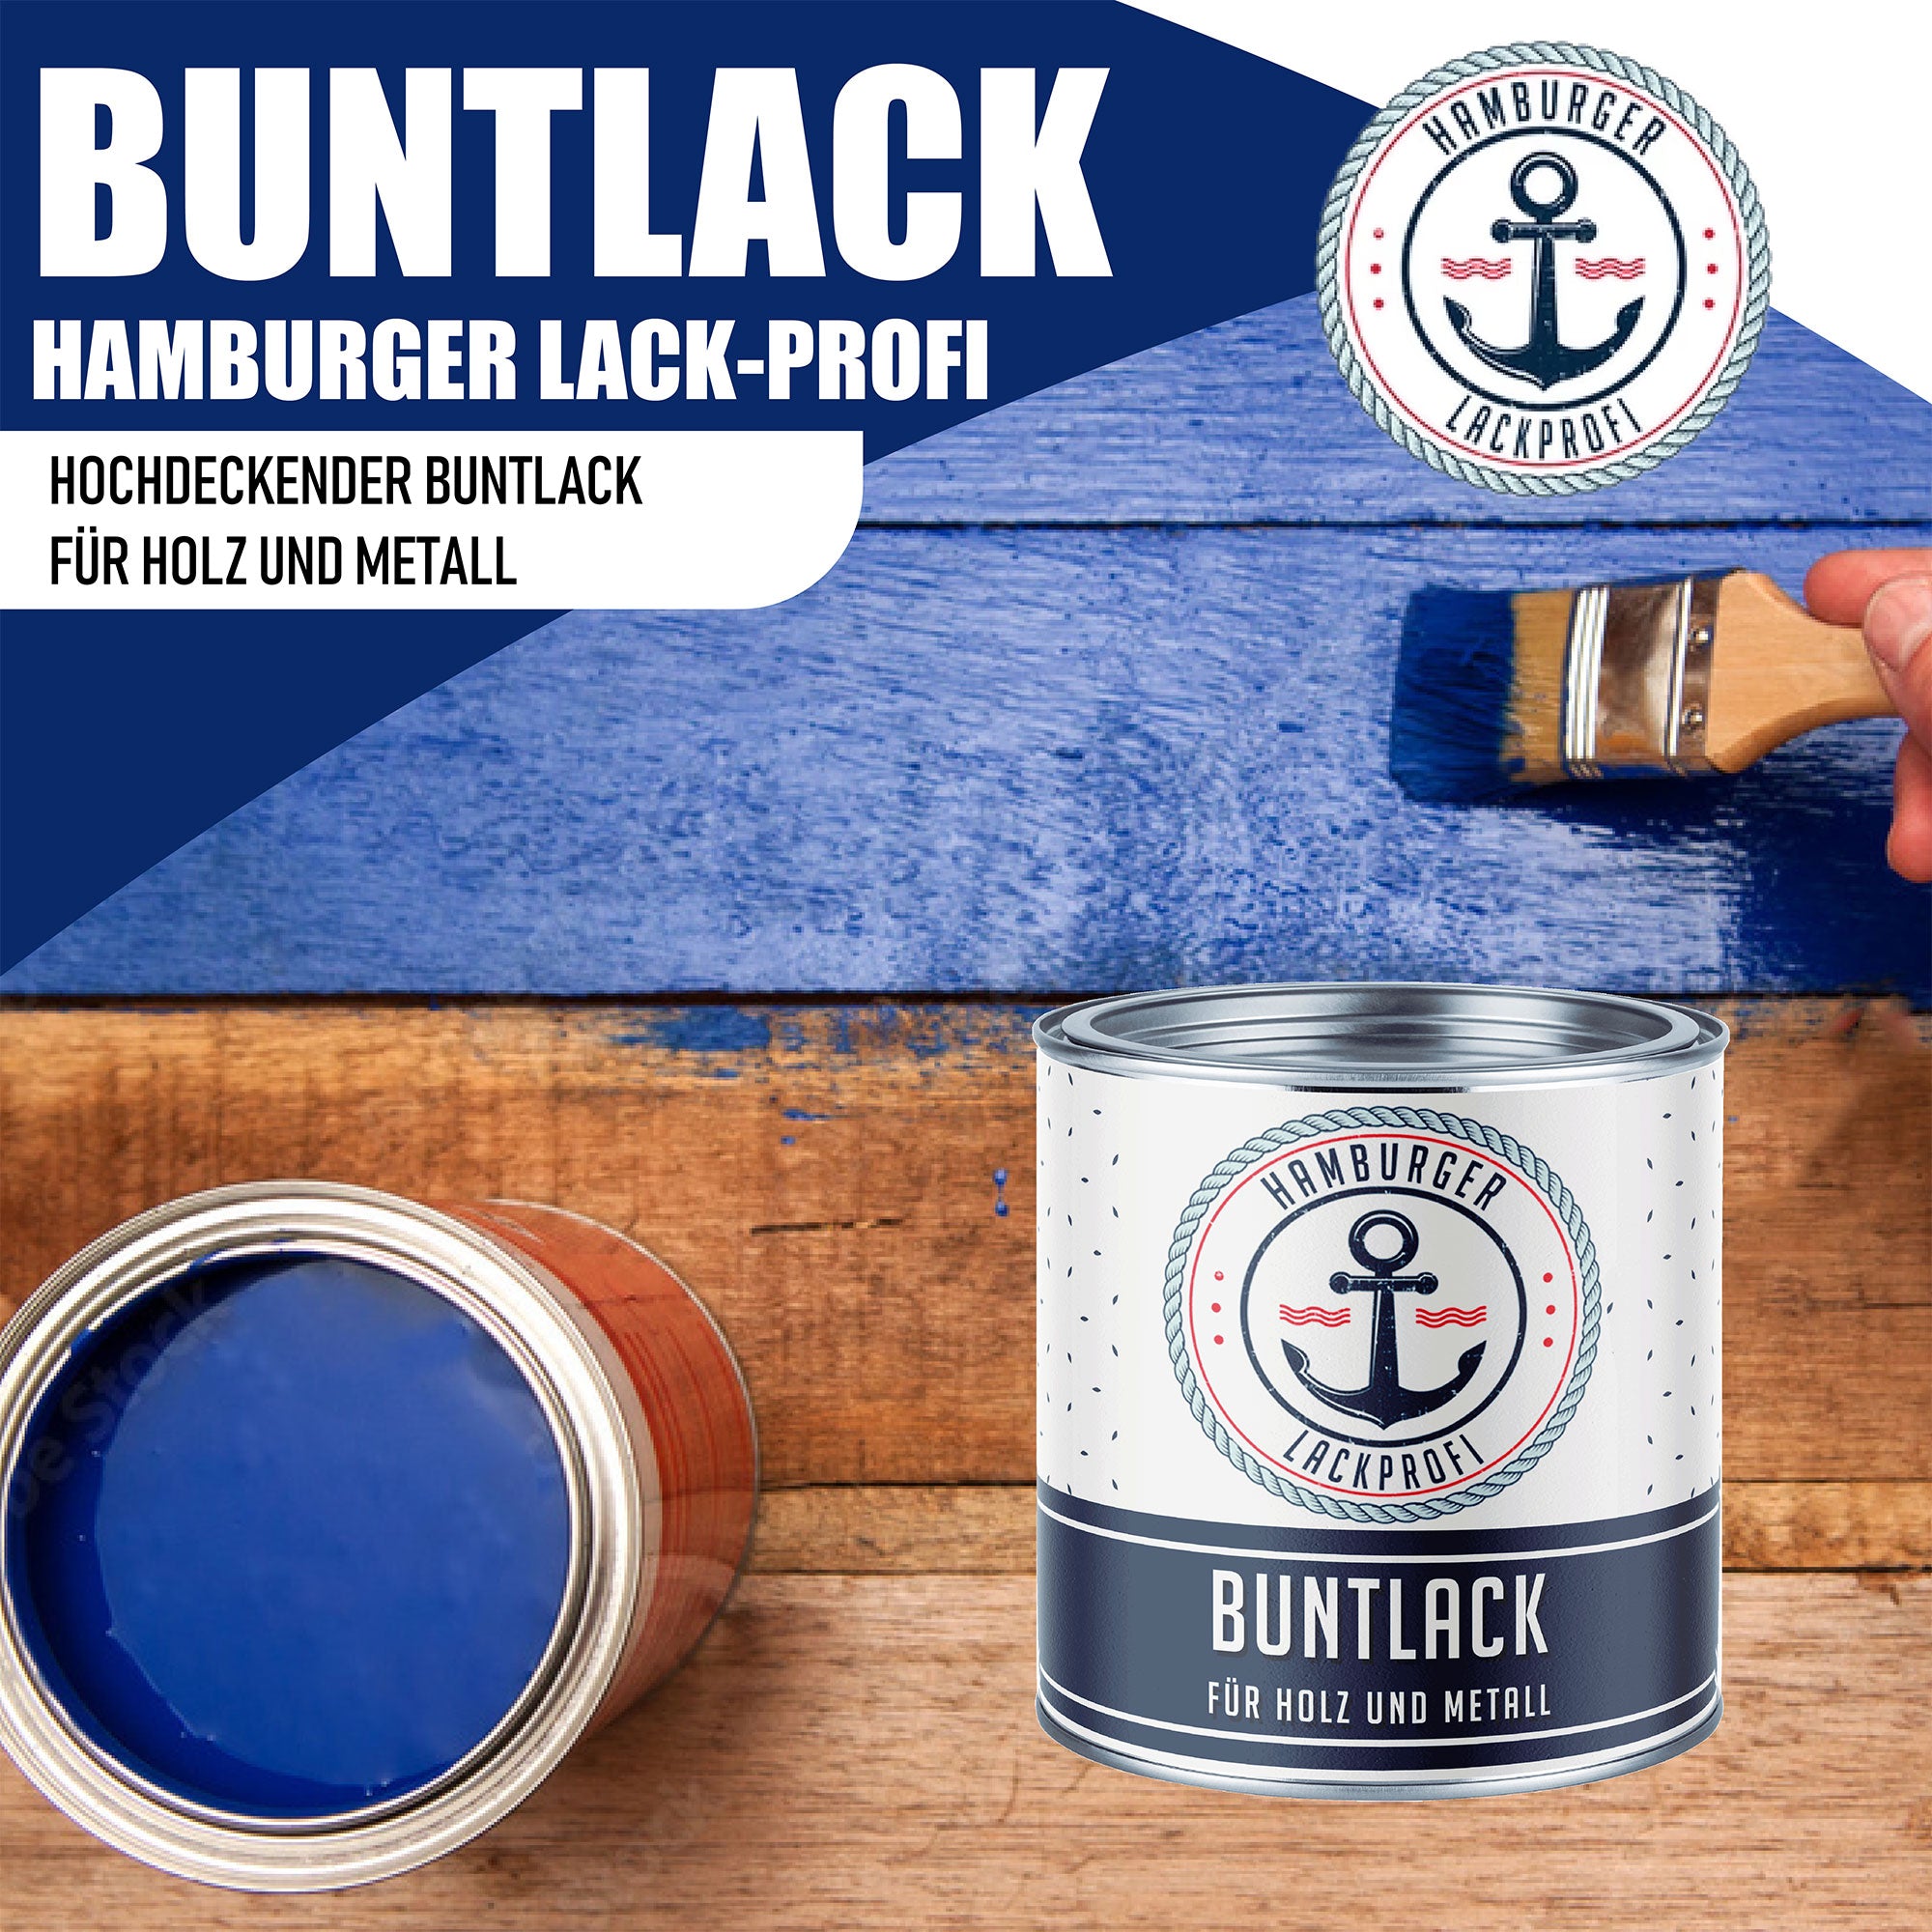 Hamburger Lack-Profi Buntlack Grasgrün RAL 6010 - Robuster Kunstharzlack